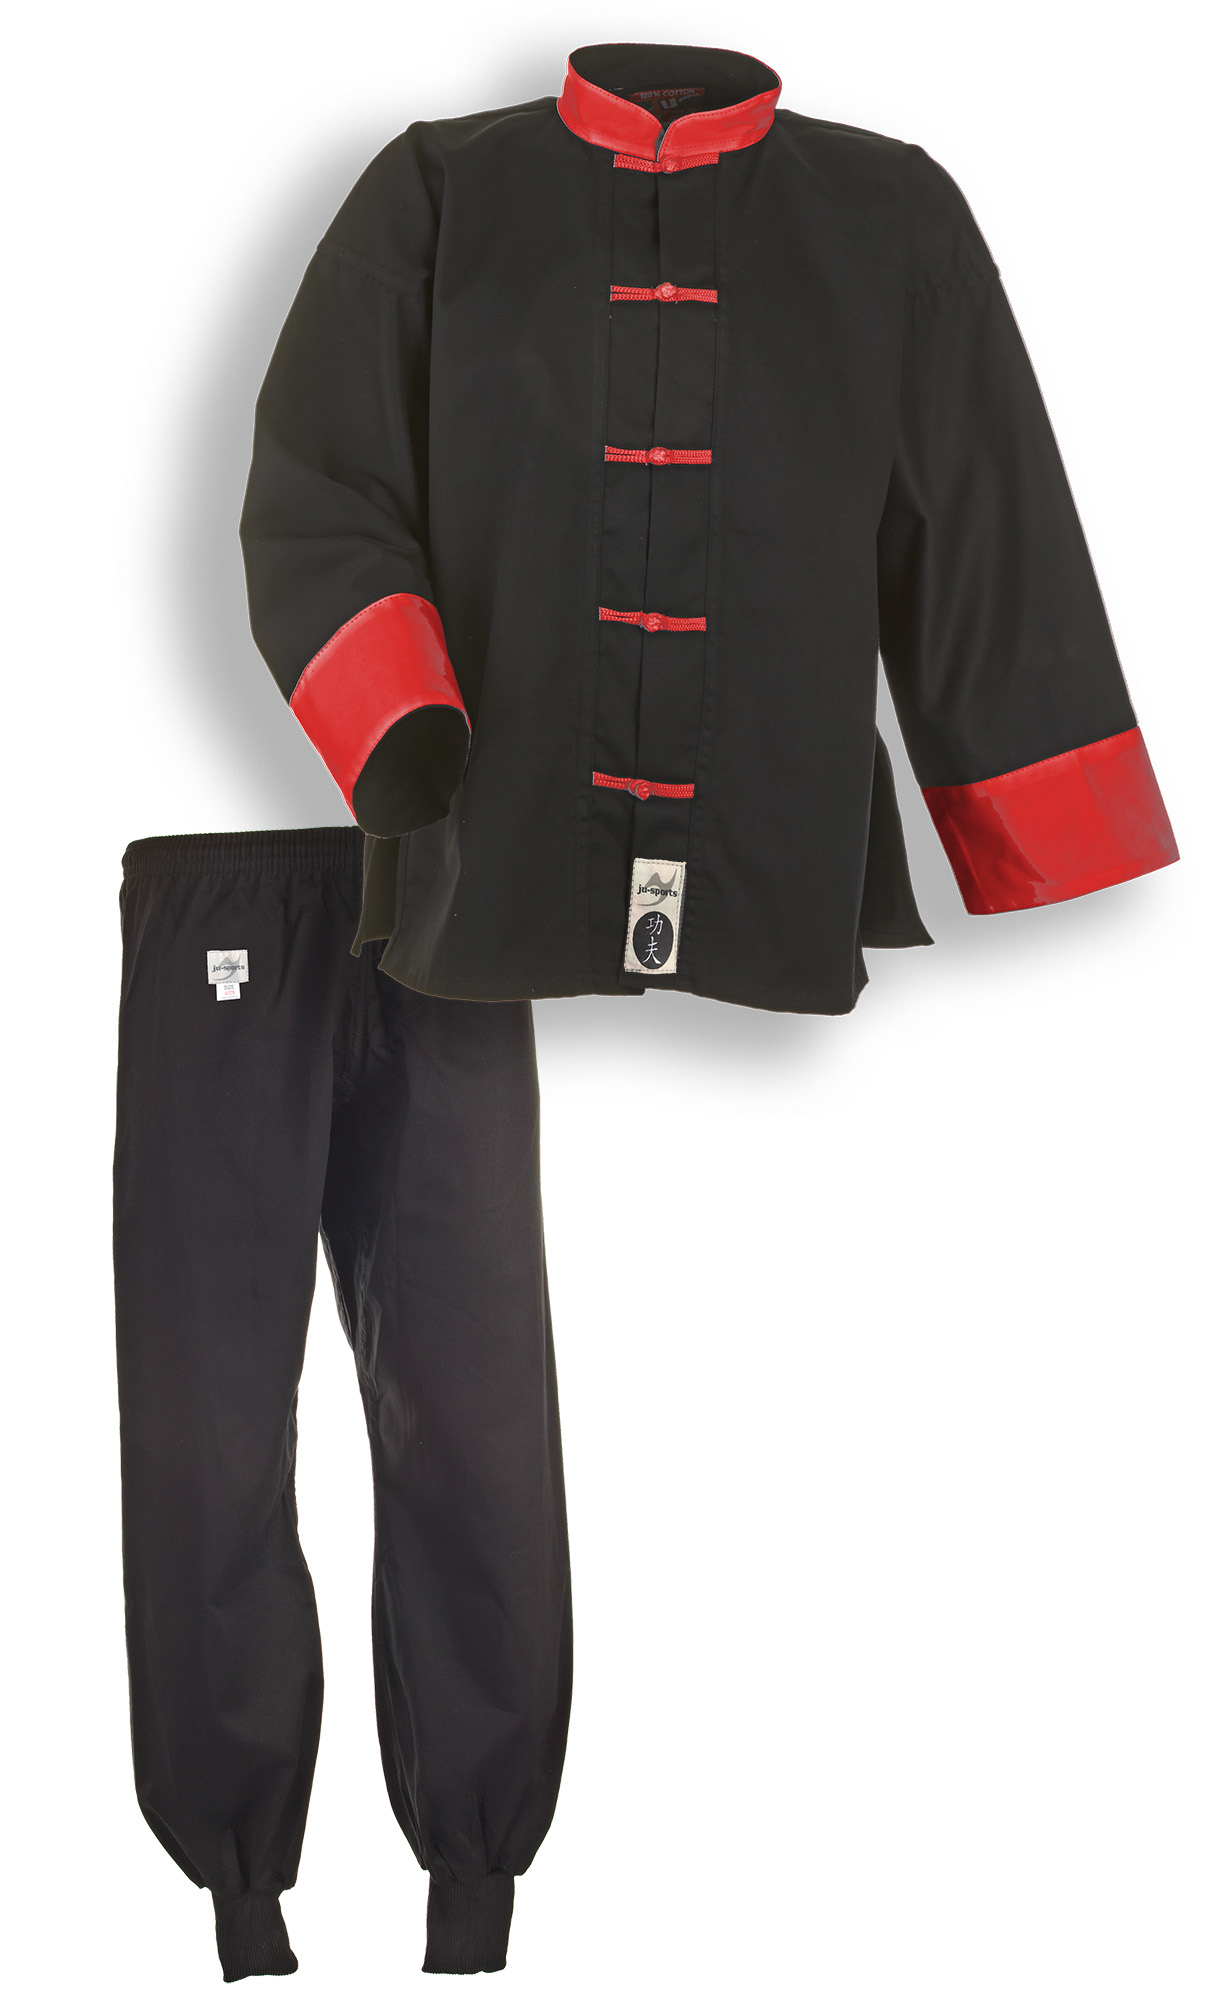 Ju-Sports Kung Fu Uniform black/red